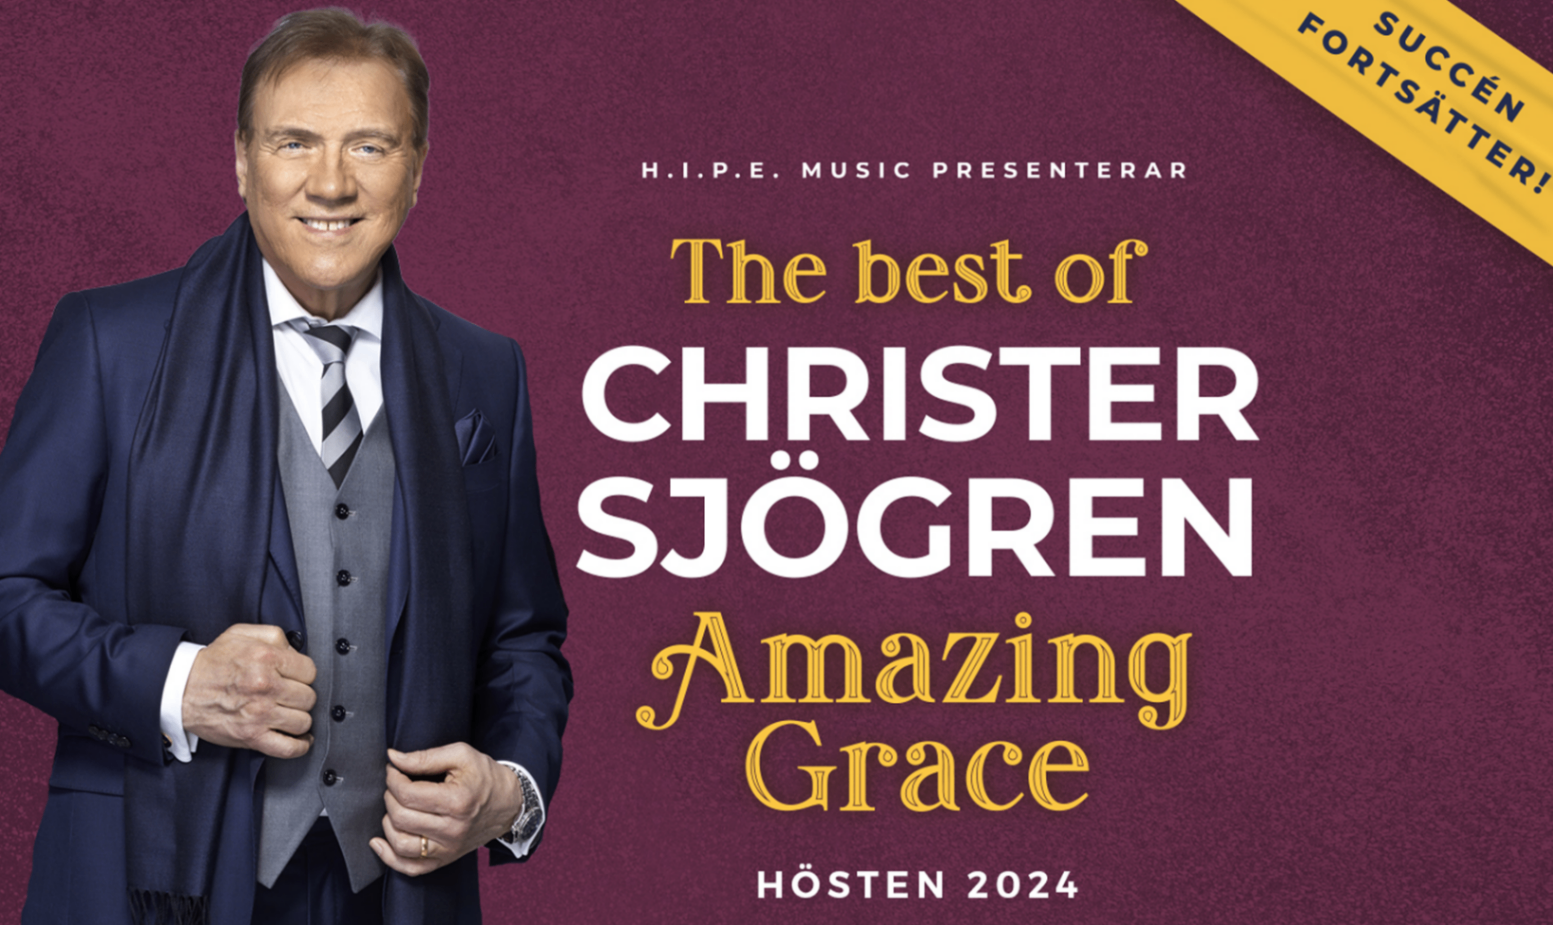 Bildbeskrivning saknas för evenemanget: The best of CHRISTER SJÖGREN - Amazing Grace